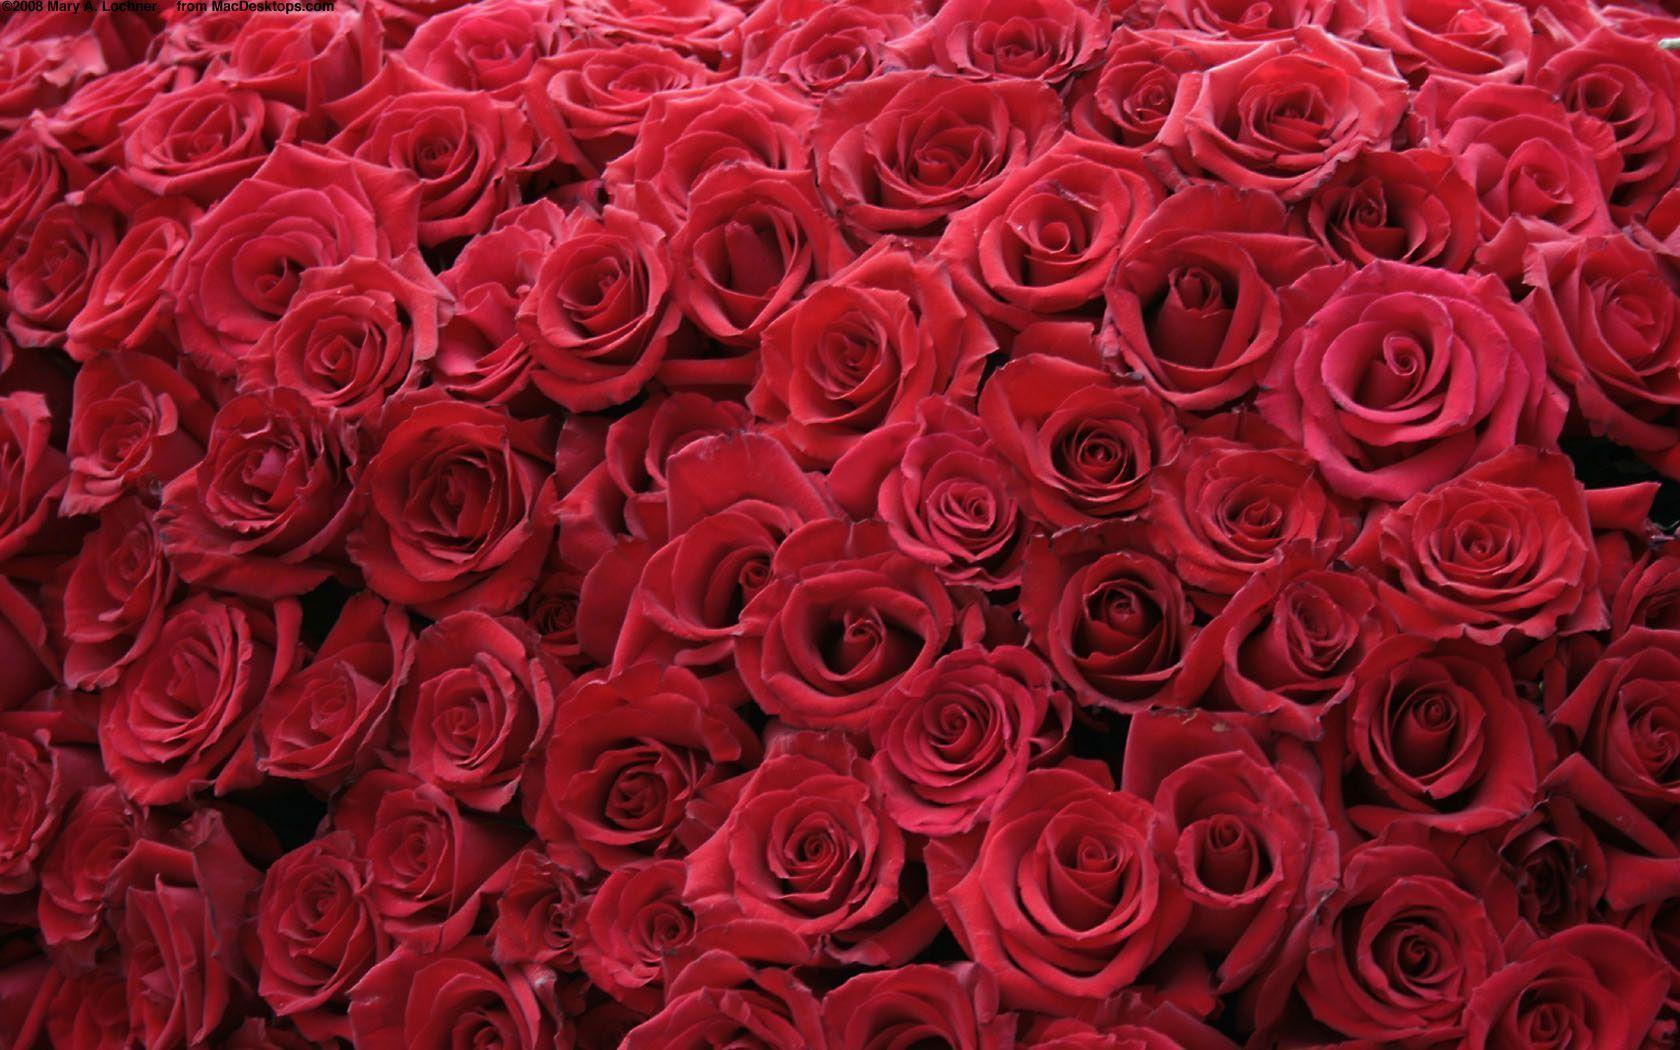 Deskd love rose wallpaper dowload